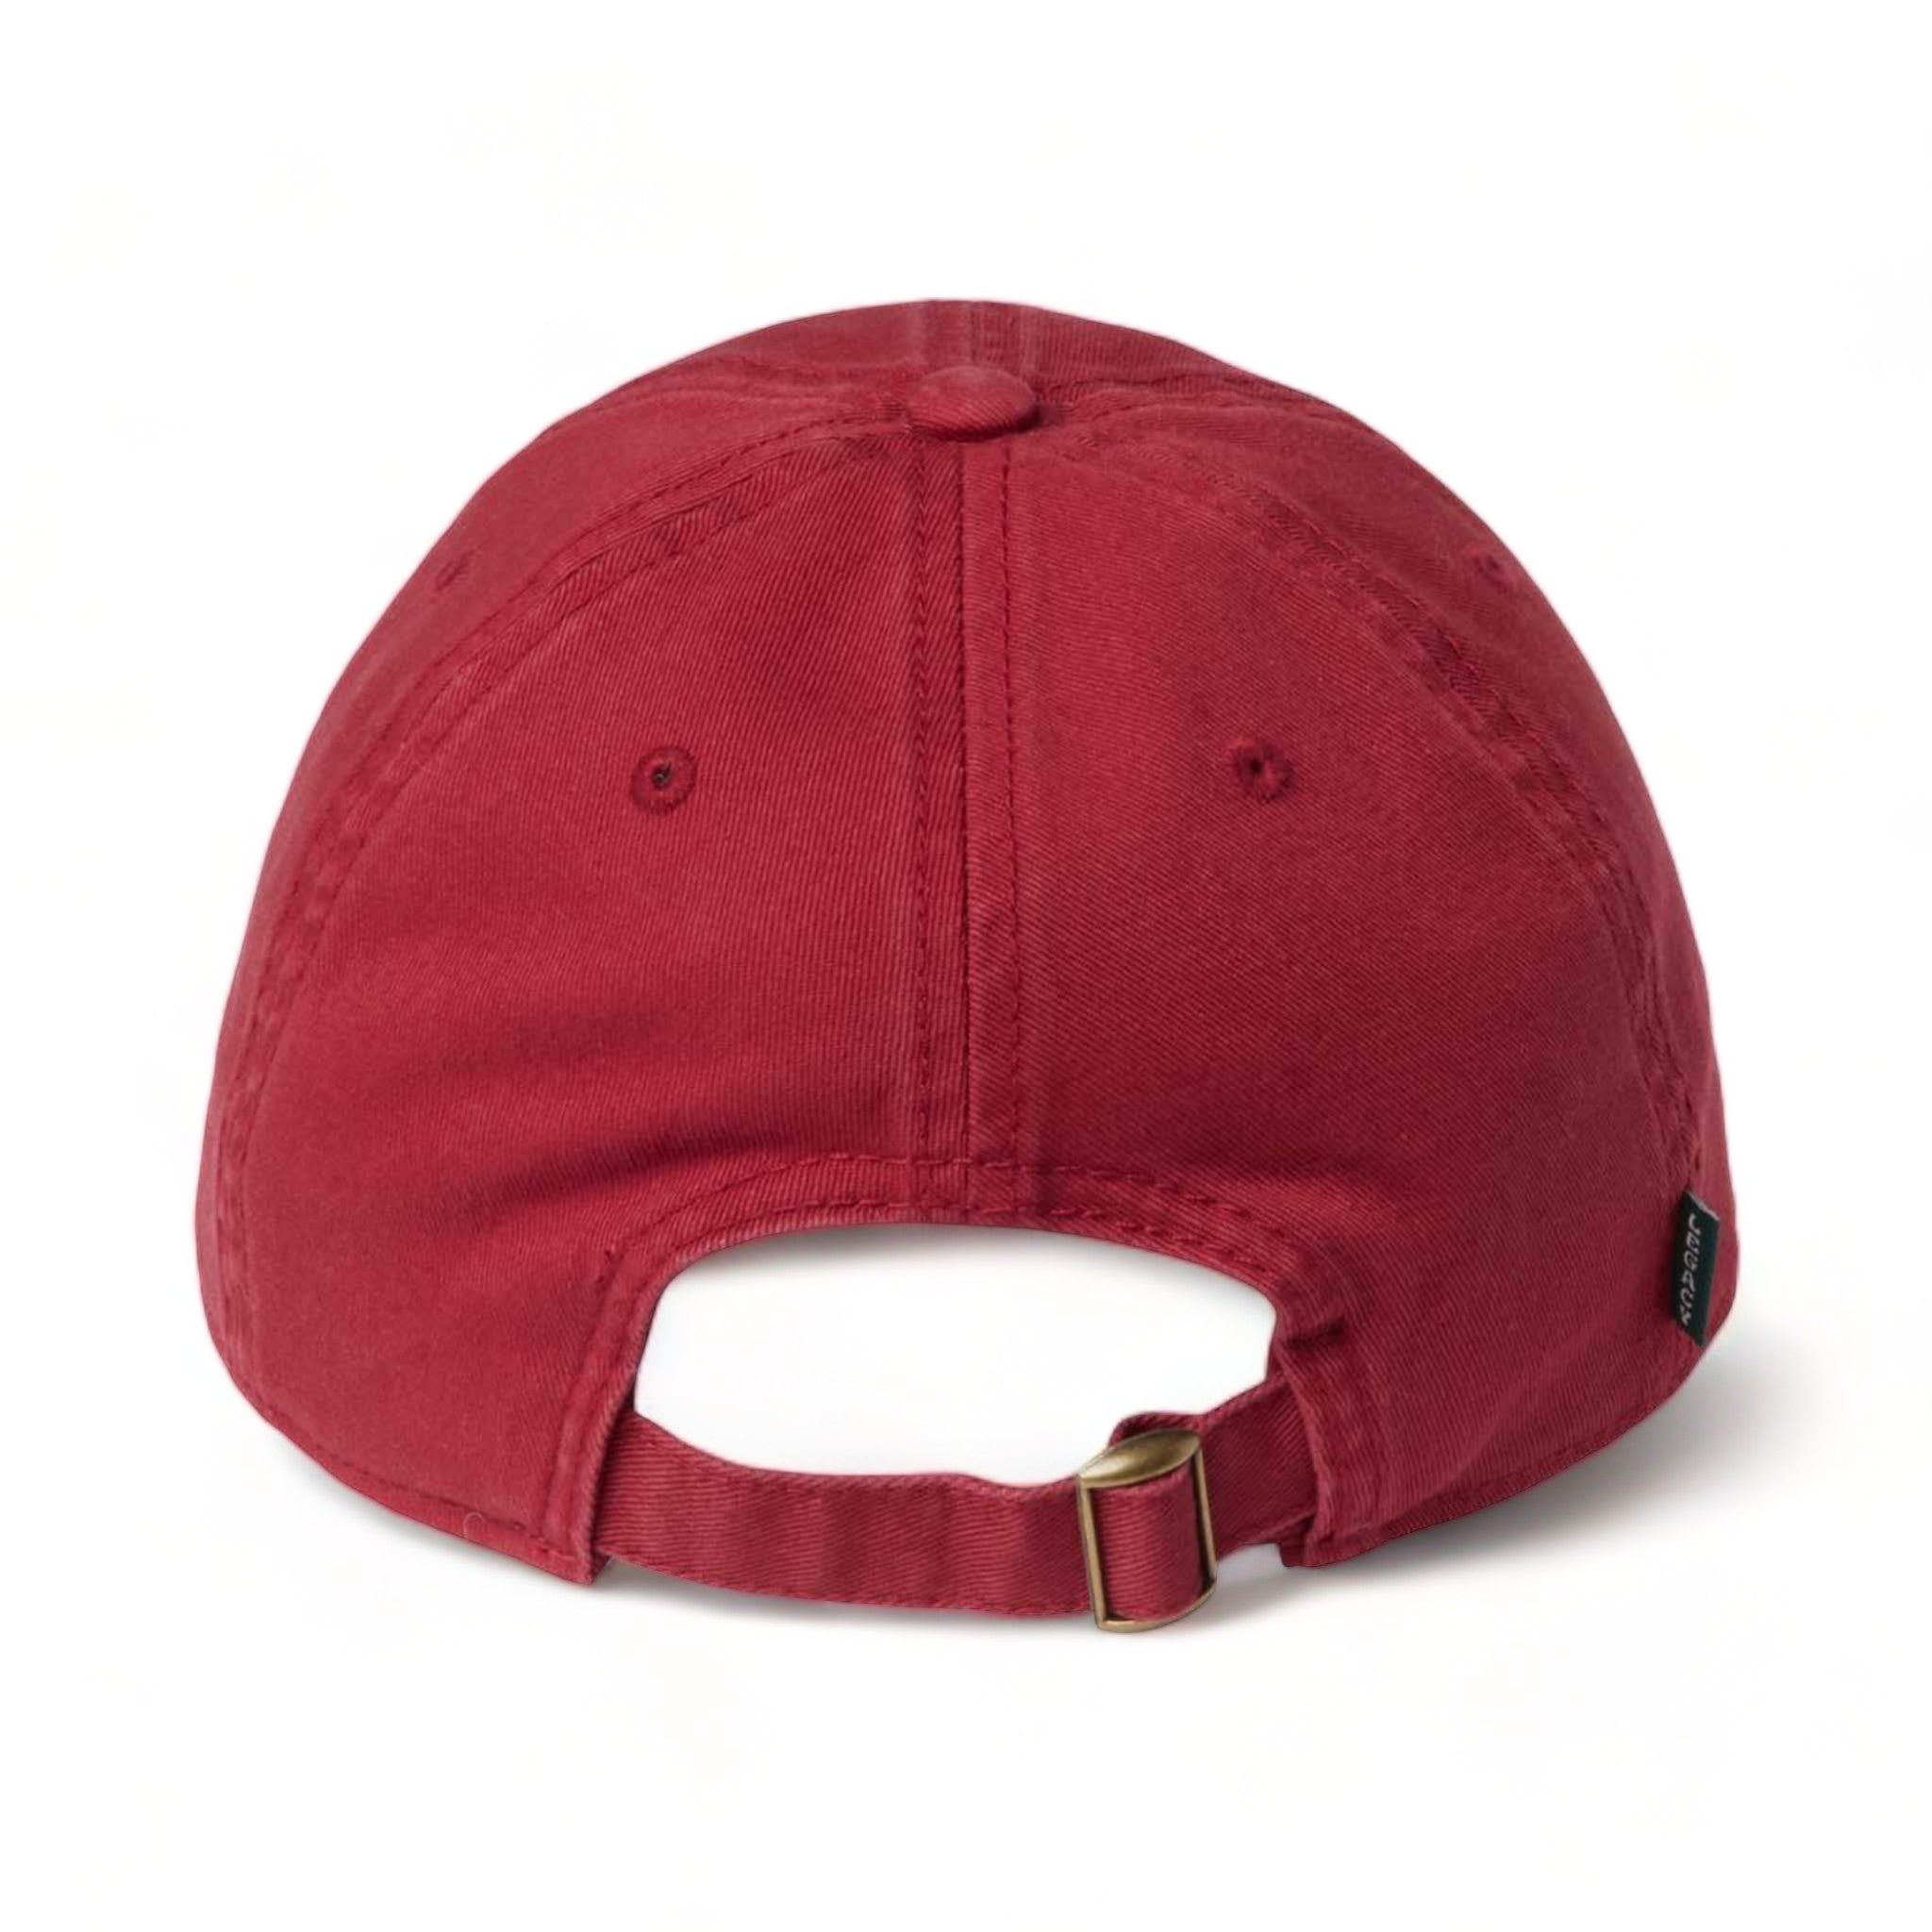 Back view of LEGACY EZA custom hat in cardinal